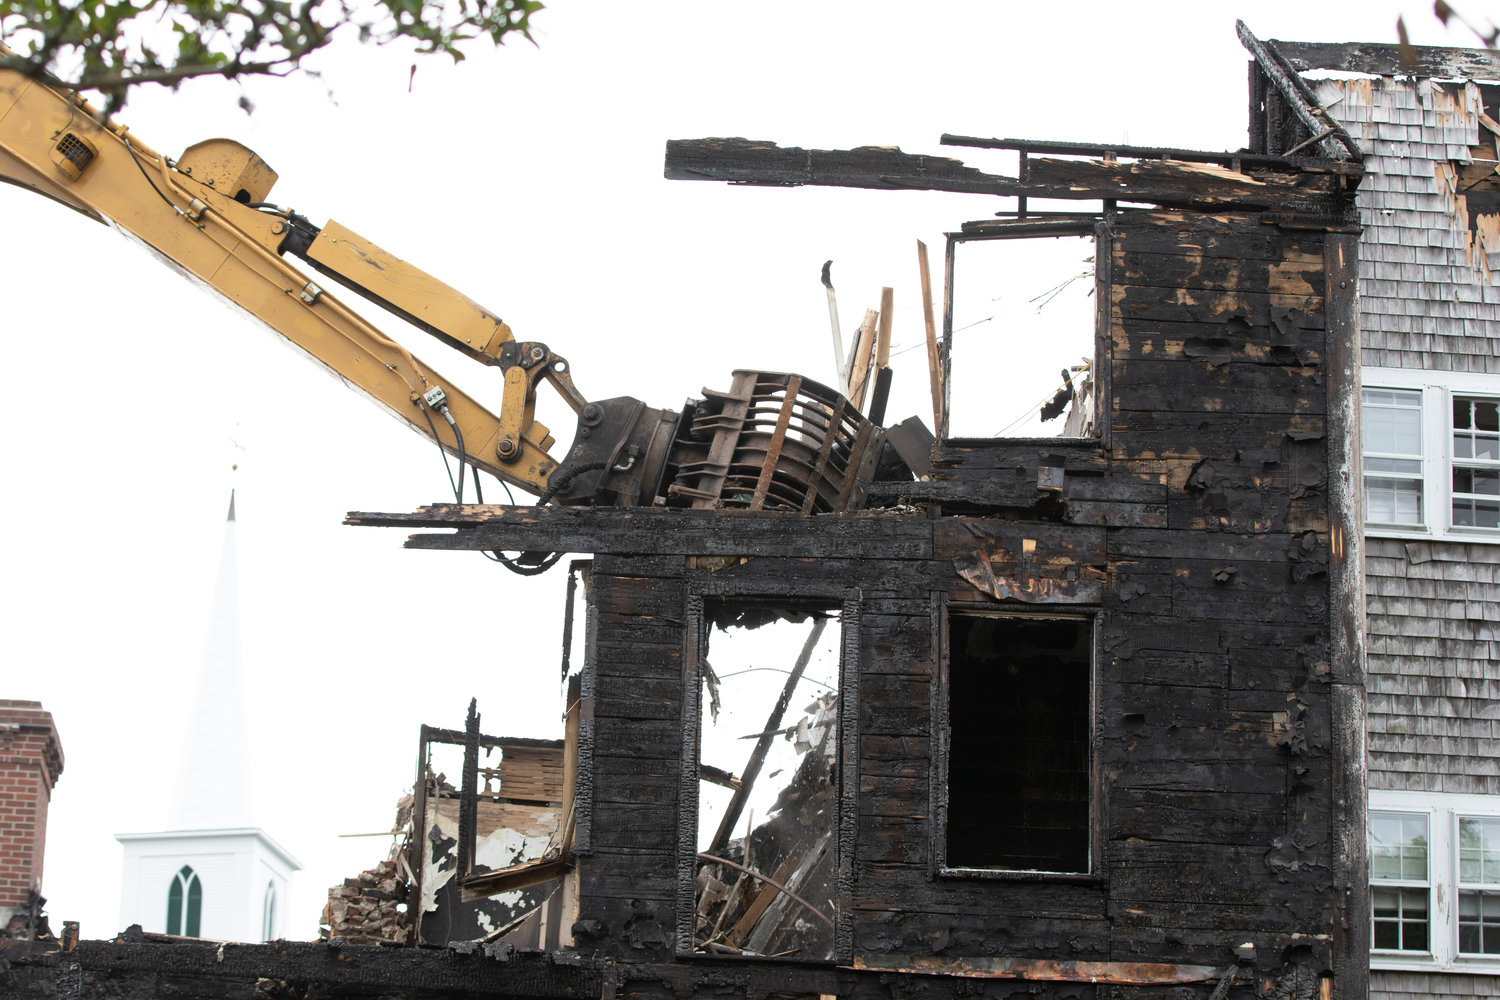 Demolition of the Veranda House hotel began Monday morning.